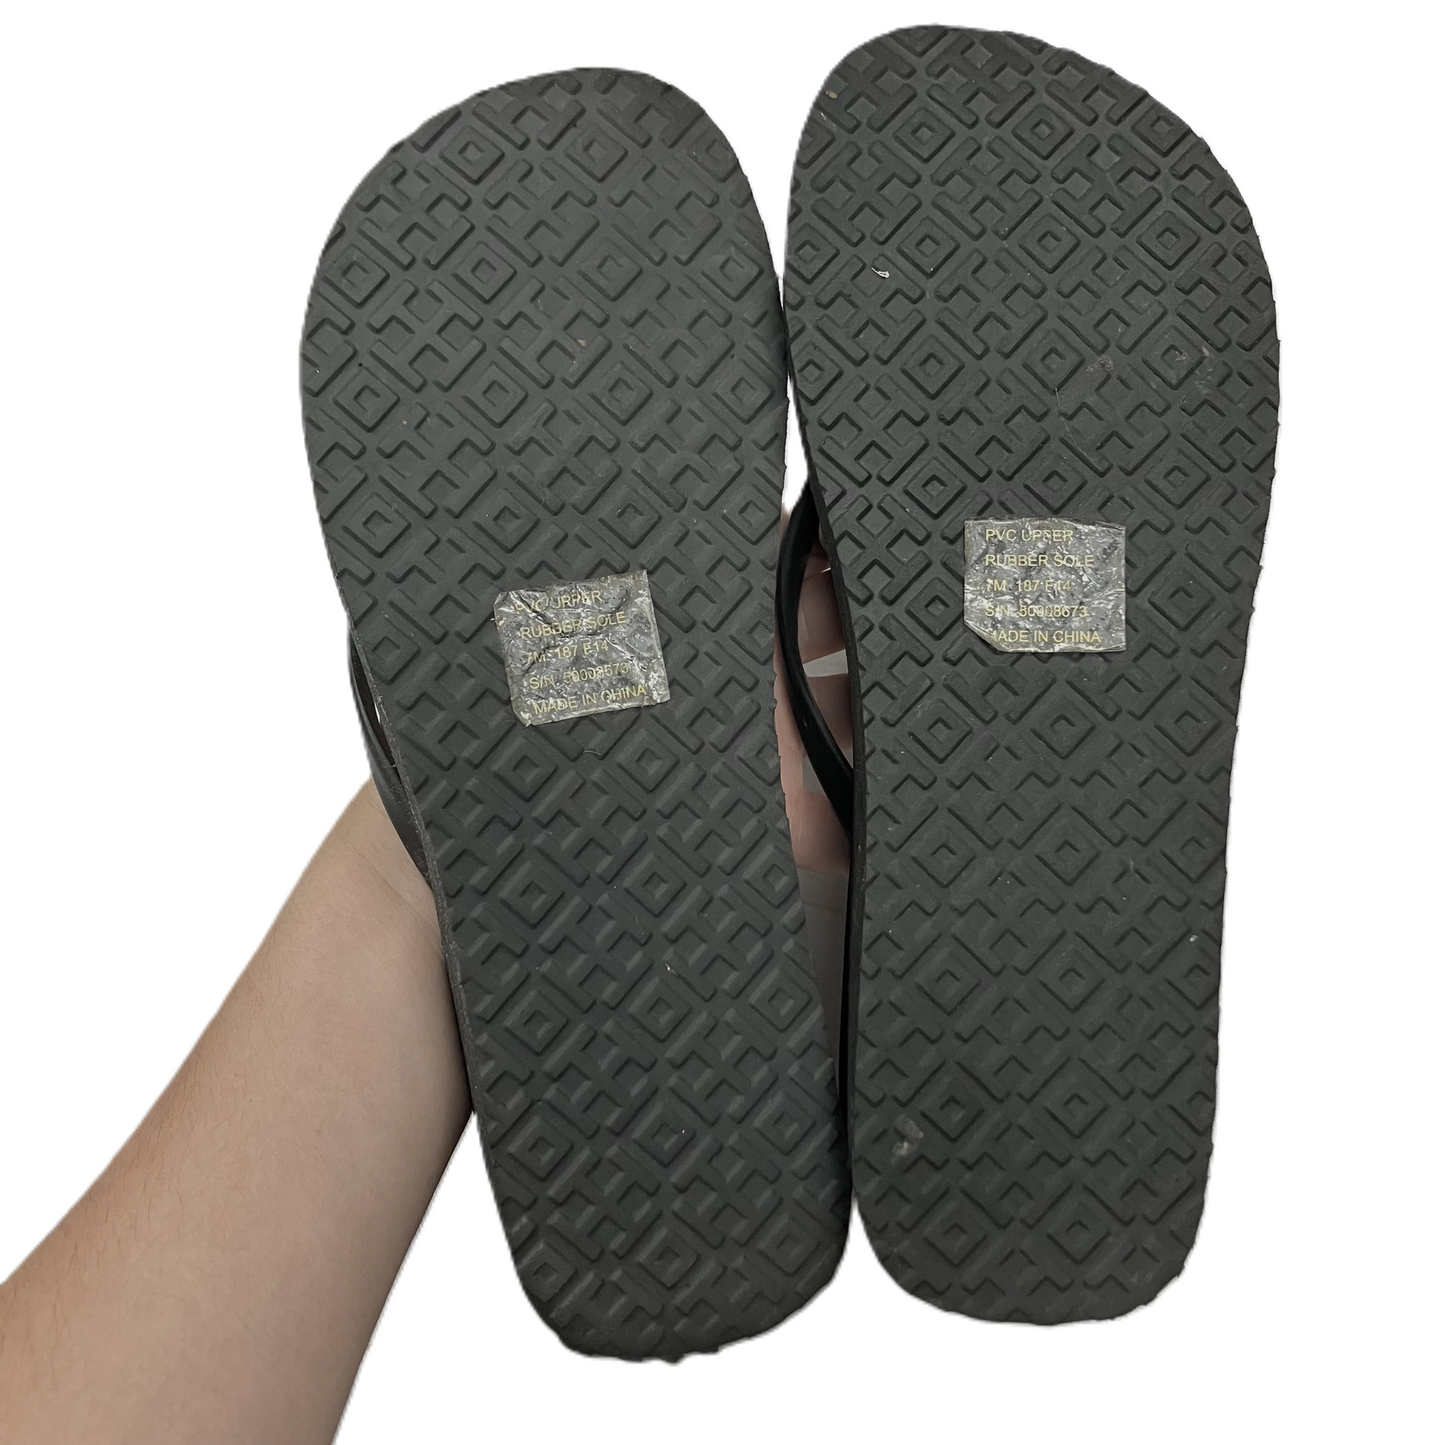 Black Sandals Flip Flops By Tory Burch, Size: 7